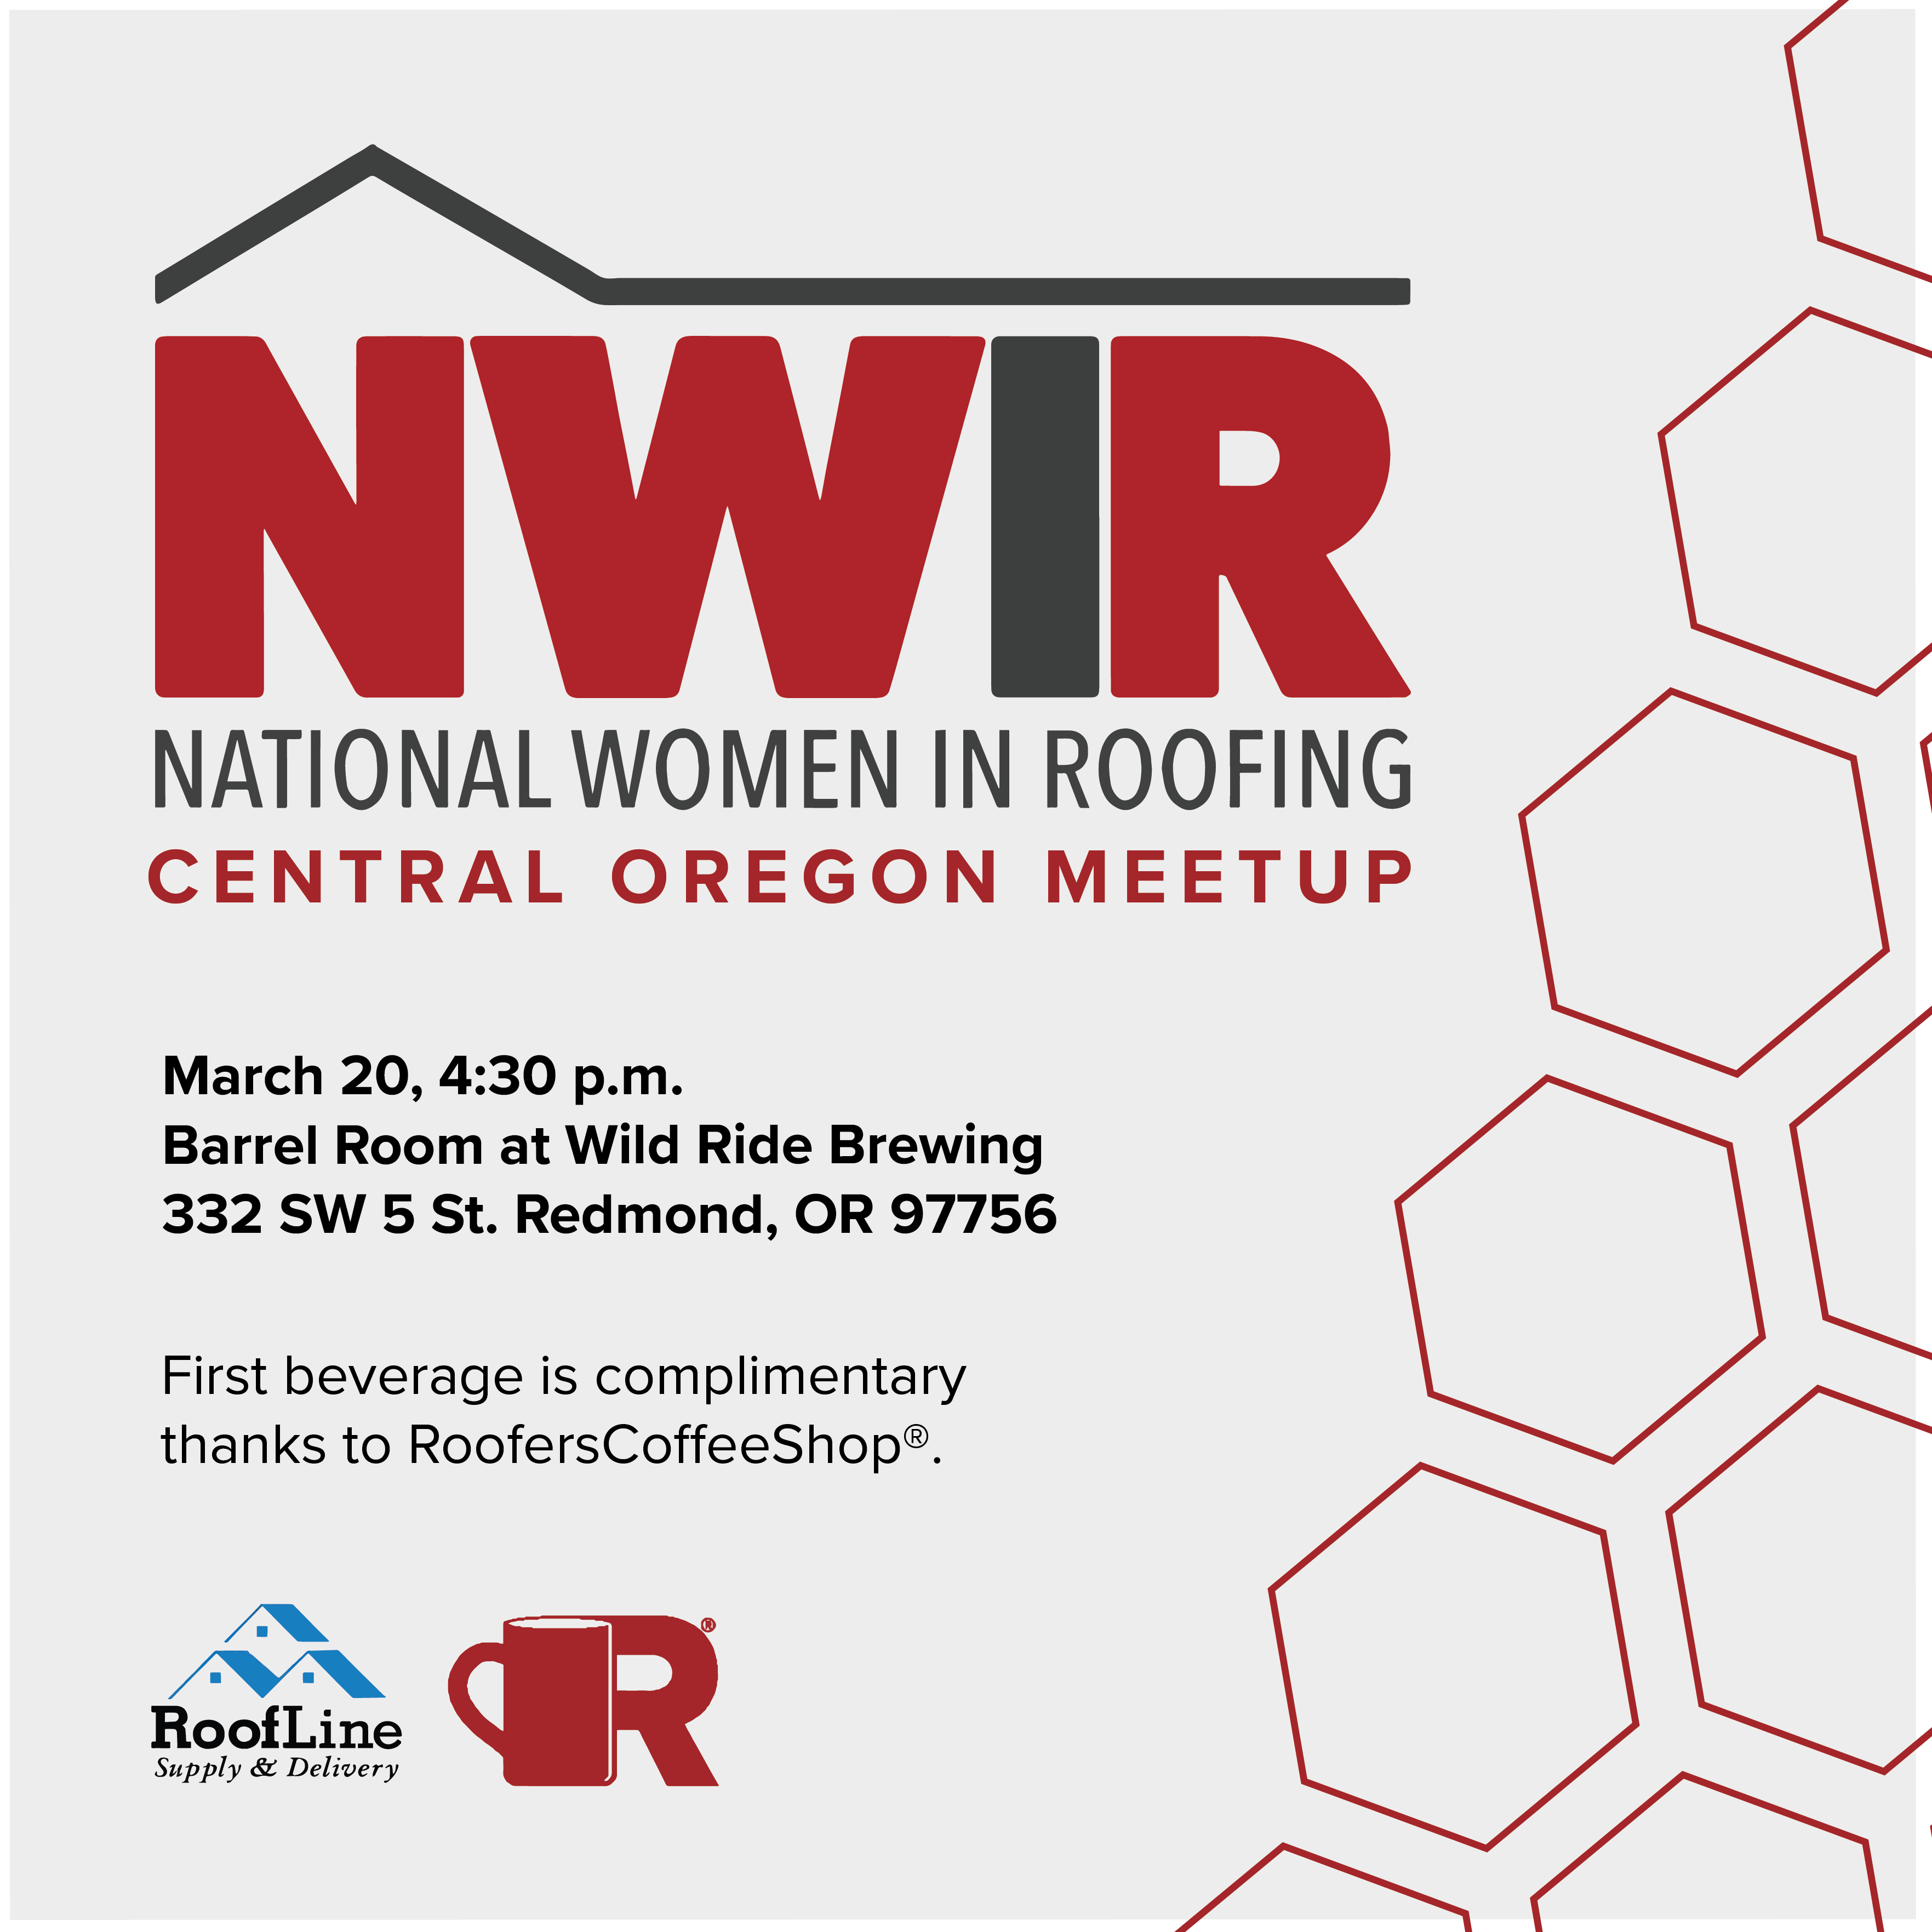 NWIR Central Oregon Meetup